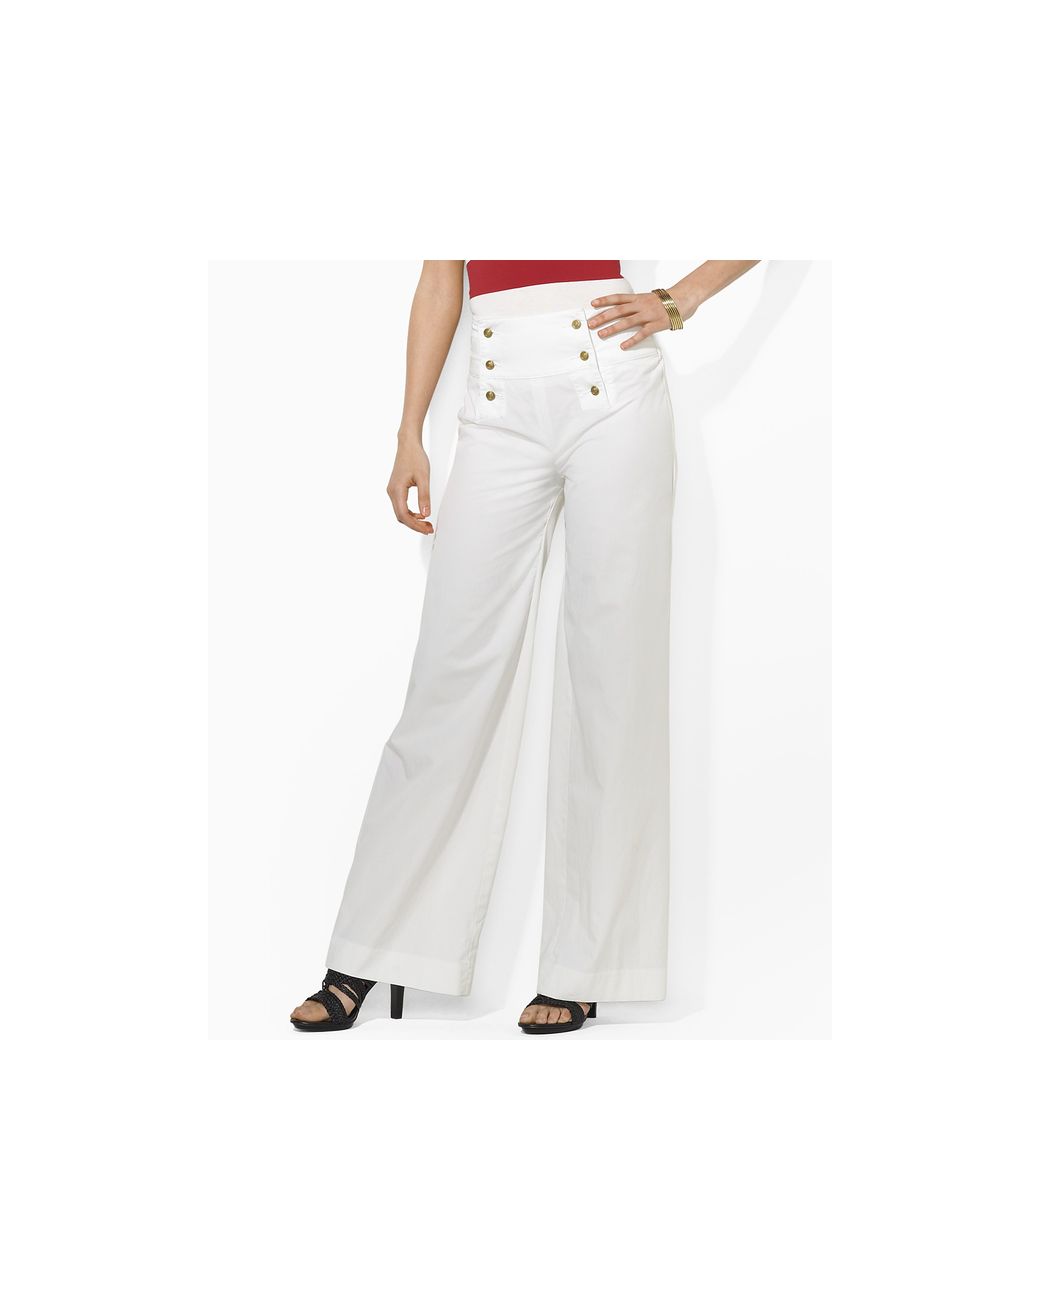 Lauren by Ralph Lauren Nicklaus Cotton Twill Sailor Pants in White | Lyst